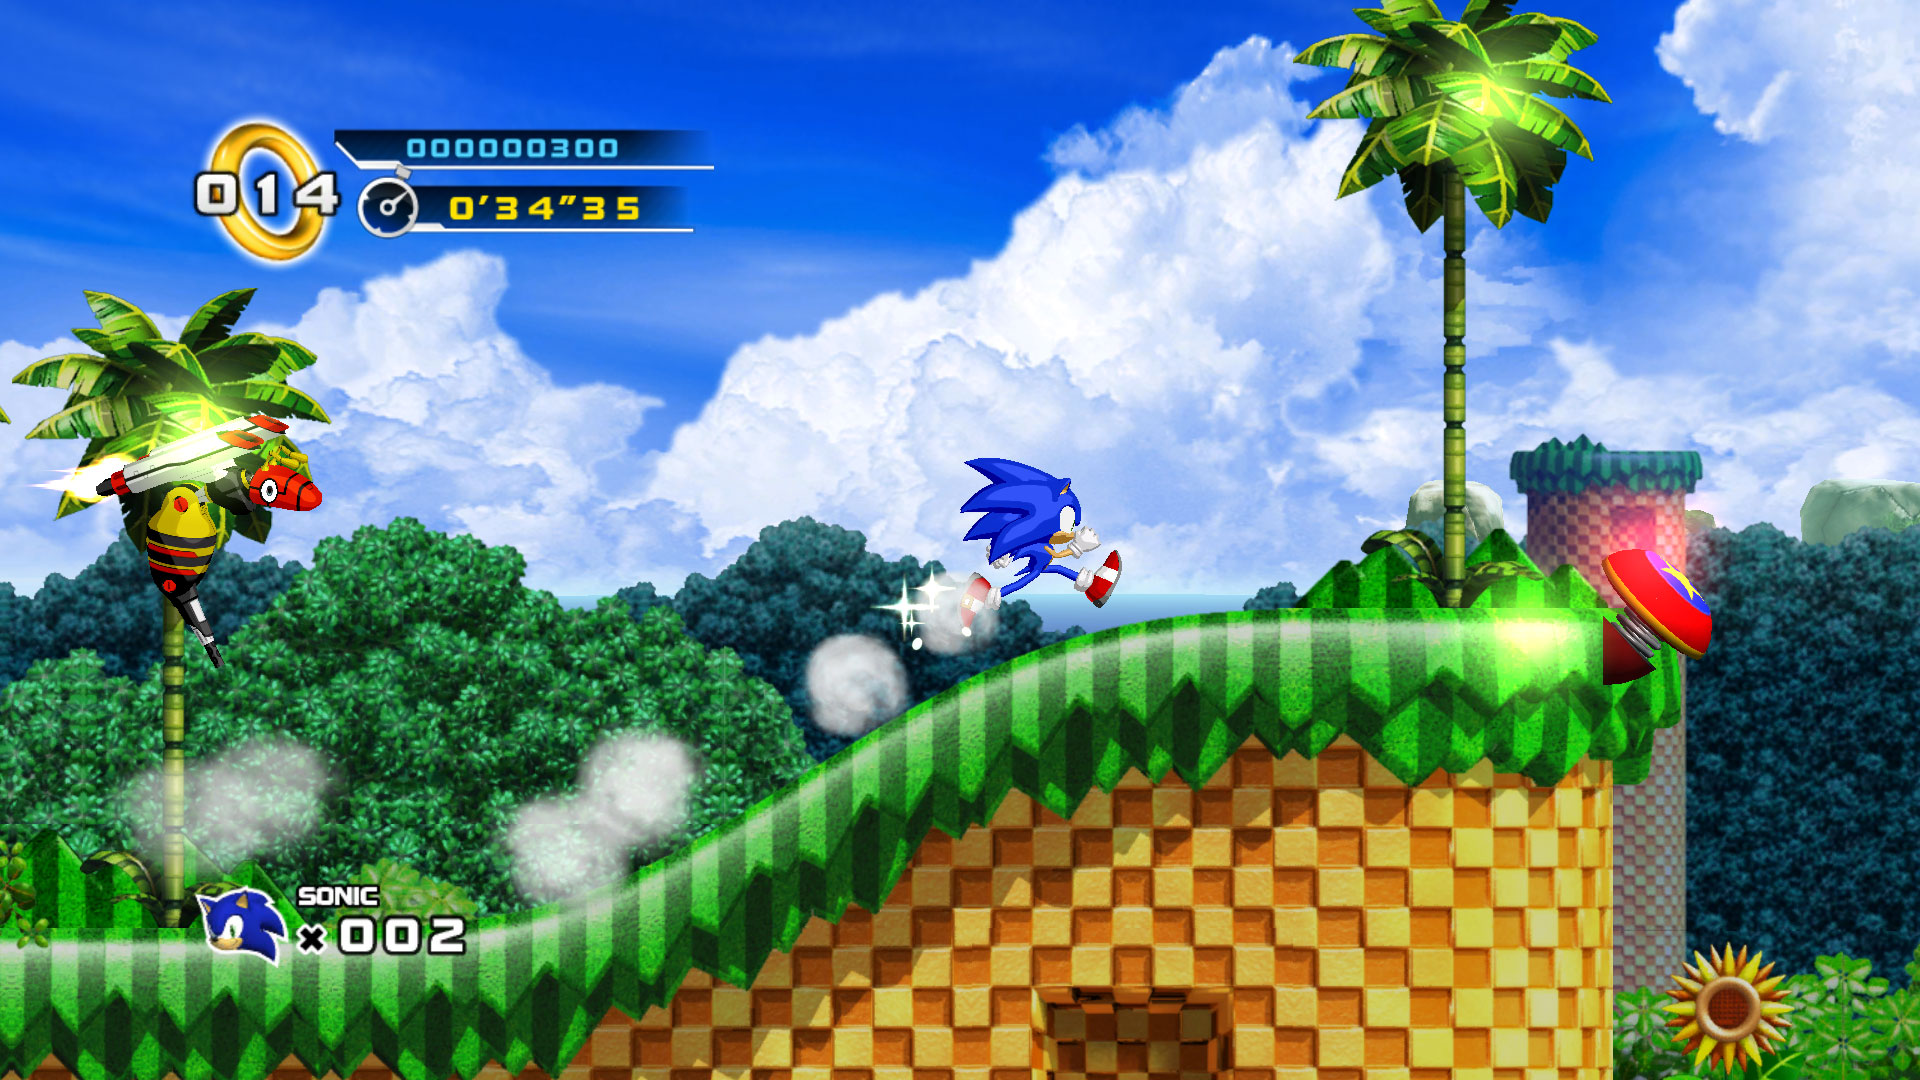 Sonic the Hedgehog 4: Episode 1 Review - Nintendojo Nintendojo